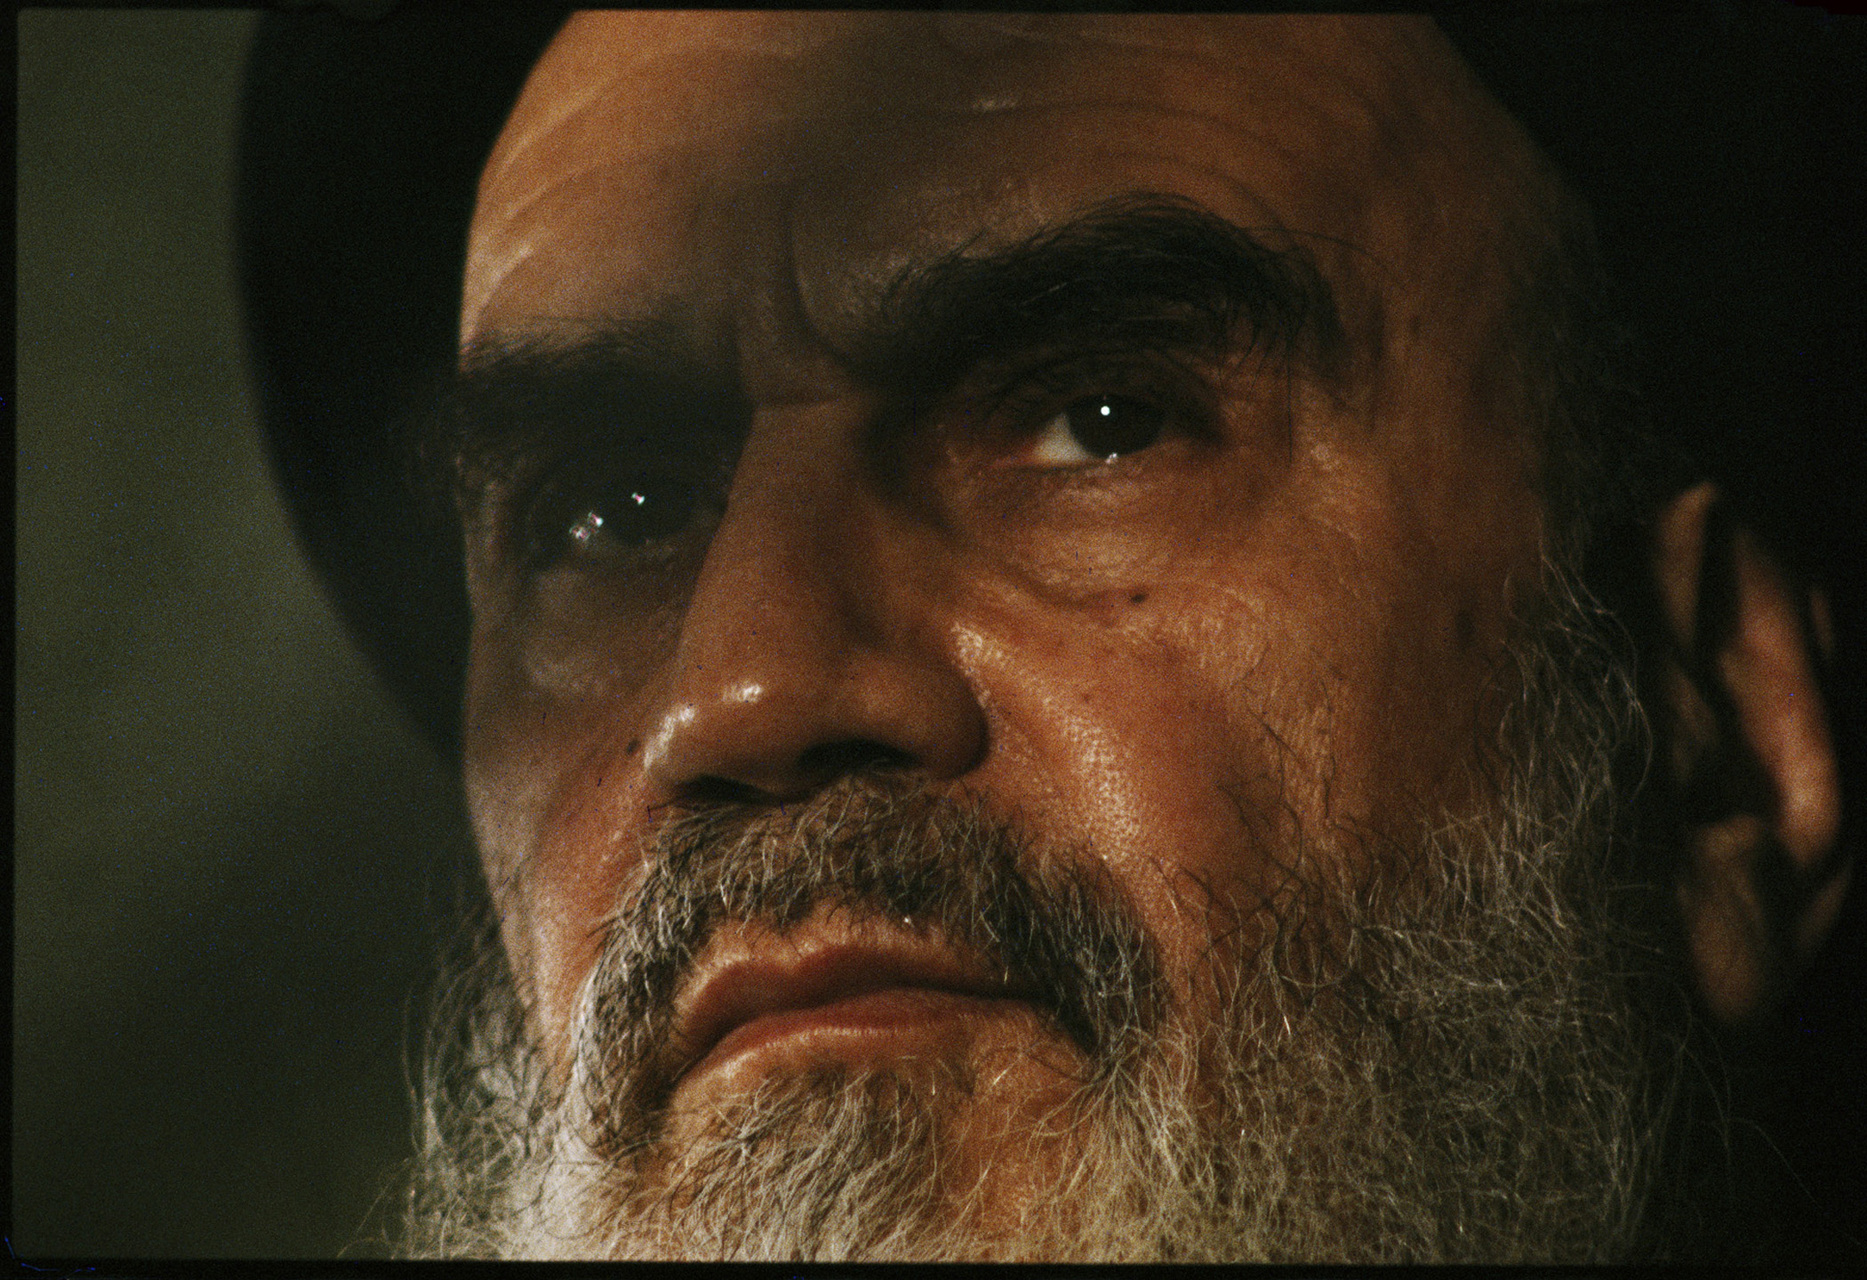 Ayatollah Khomeini.